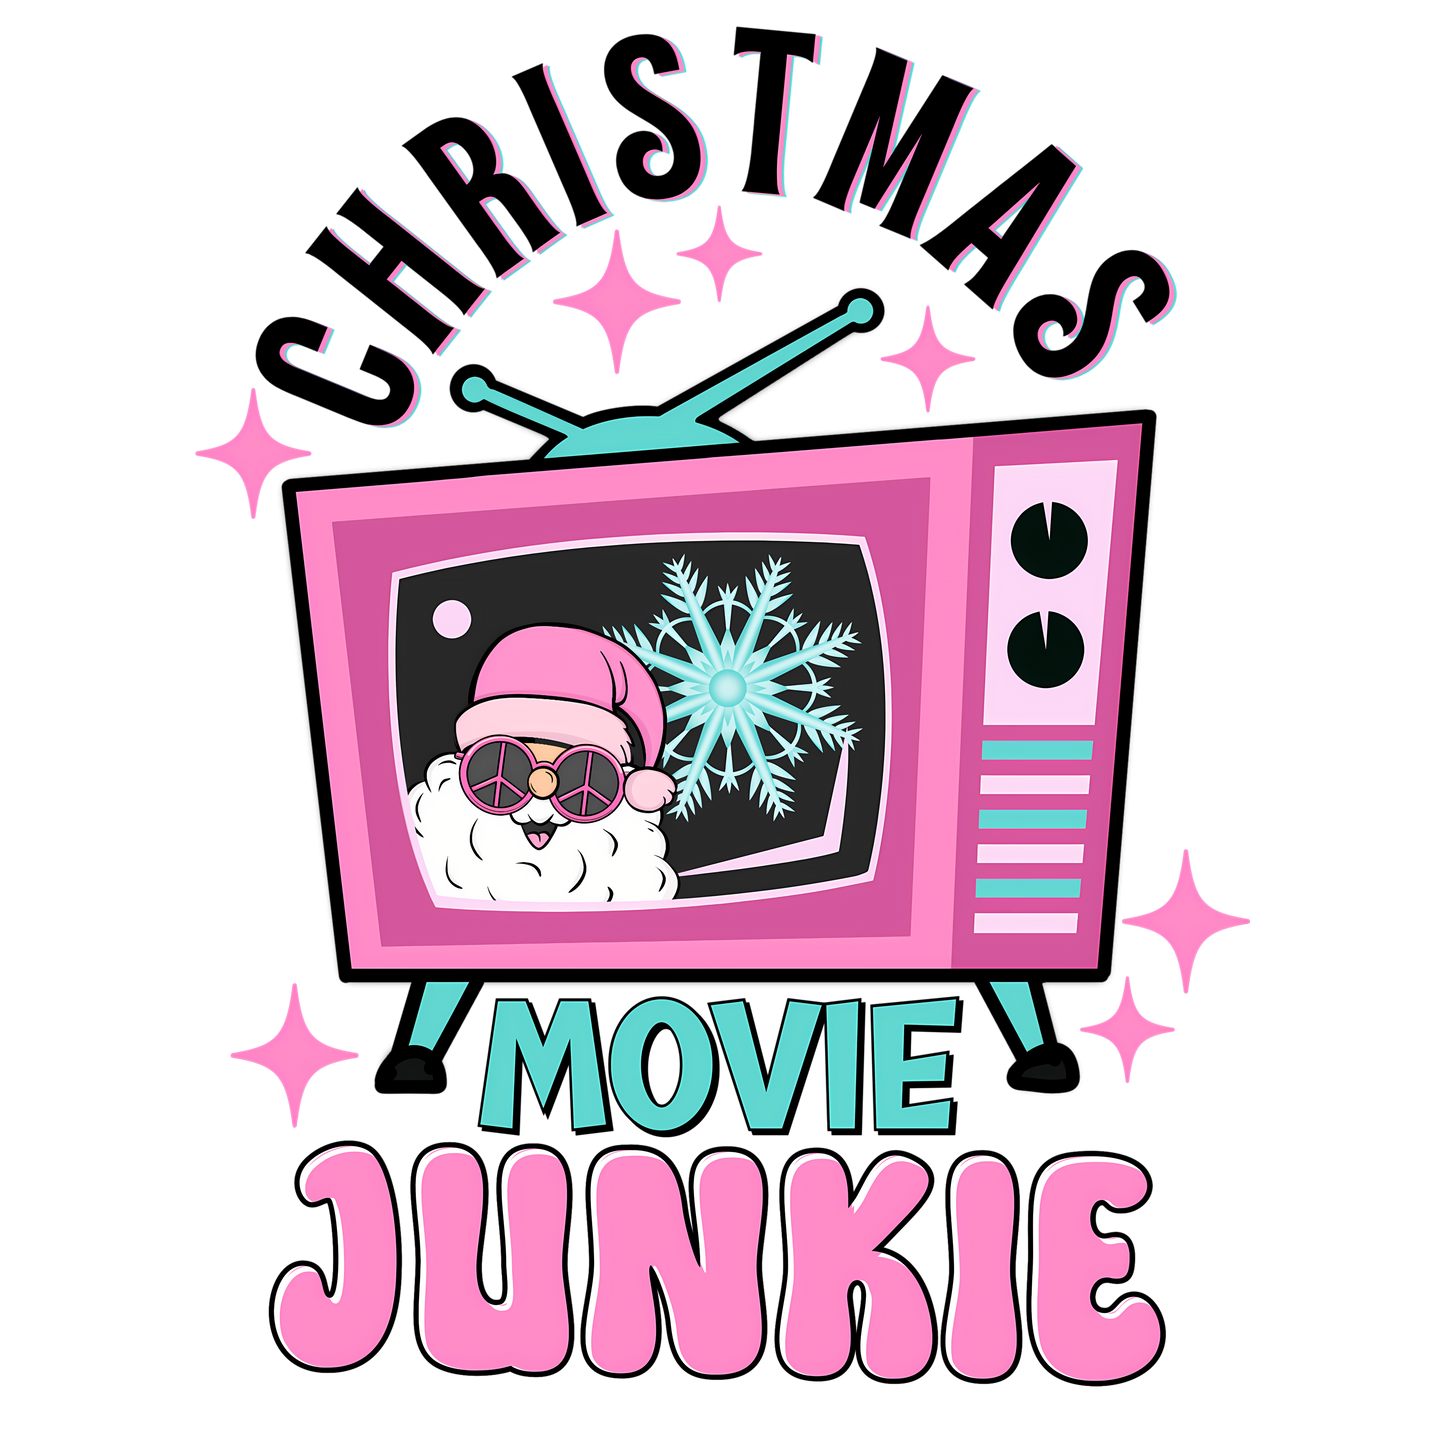 "Christmas Movie Junkie" Transfer